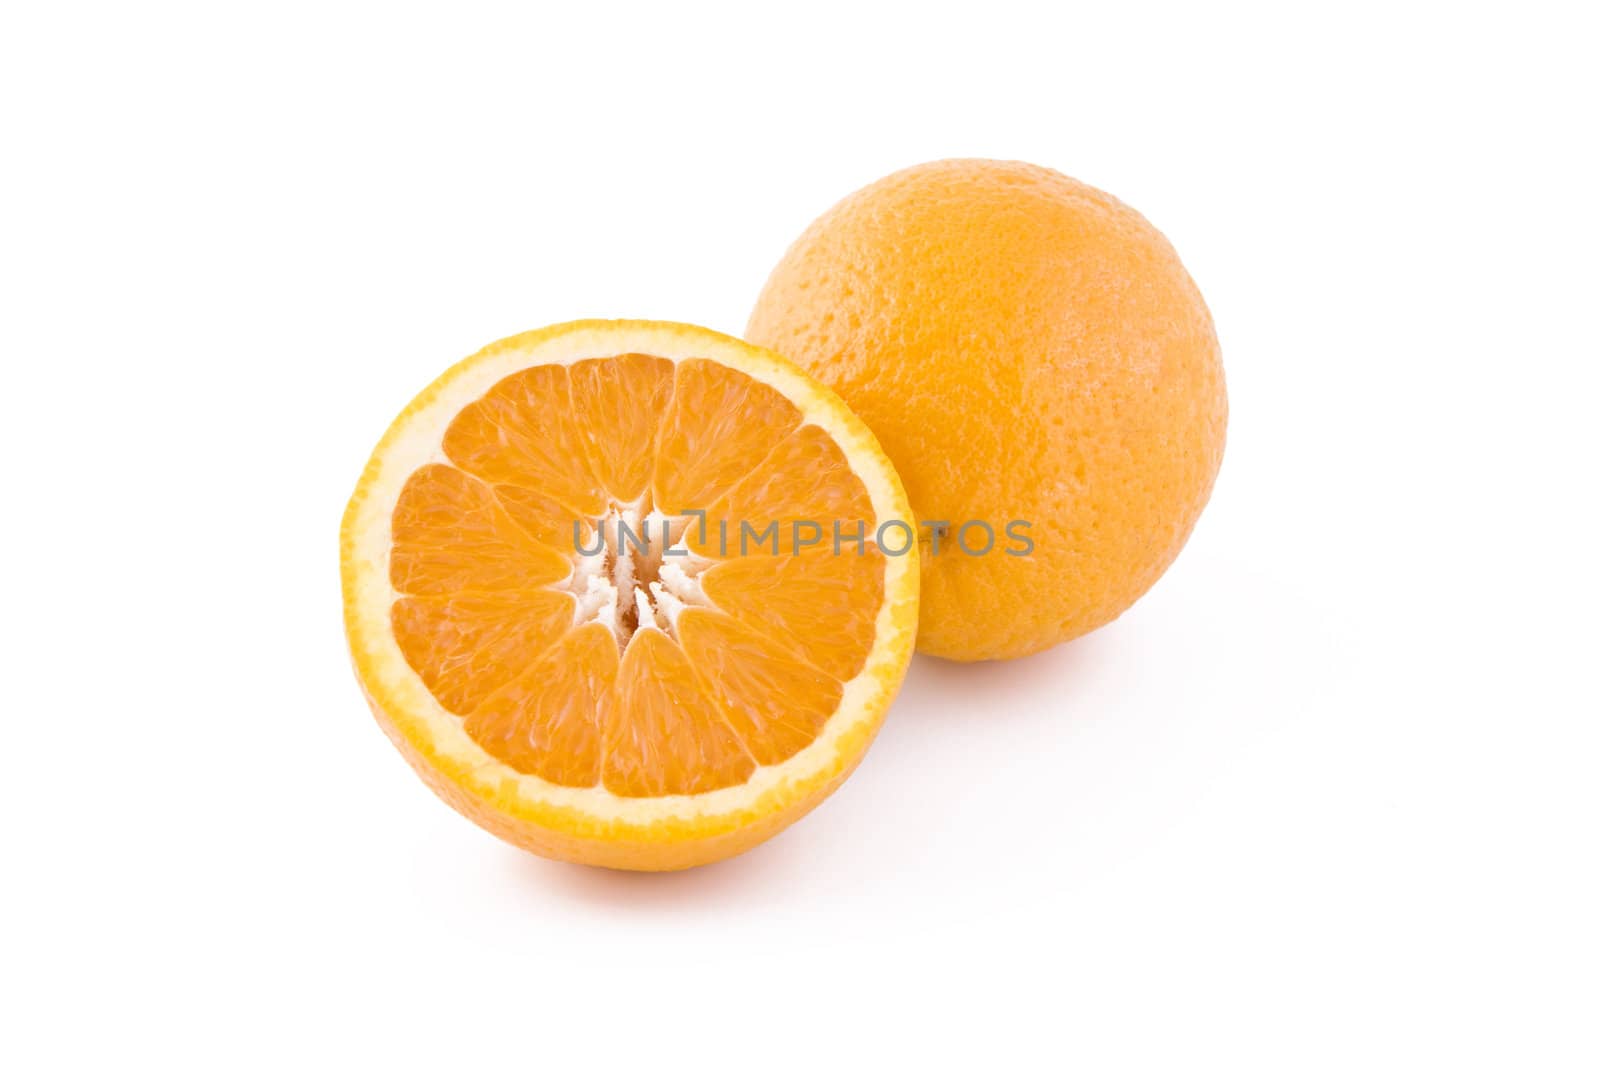 Fresh orange fruits by Gbuglok